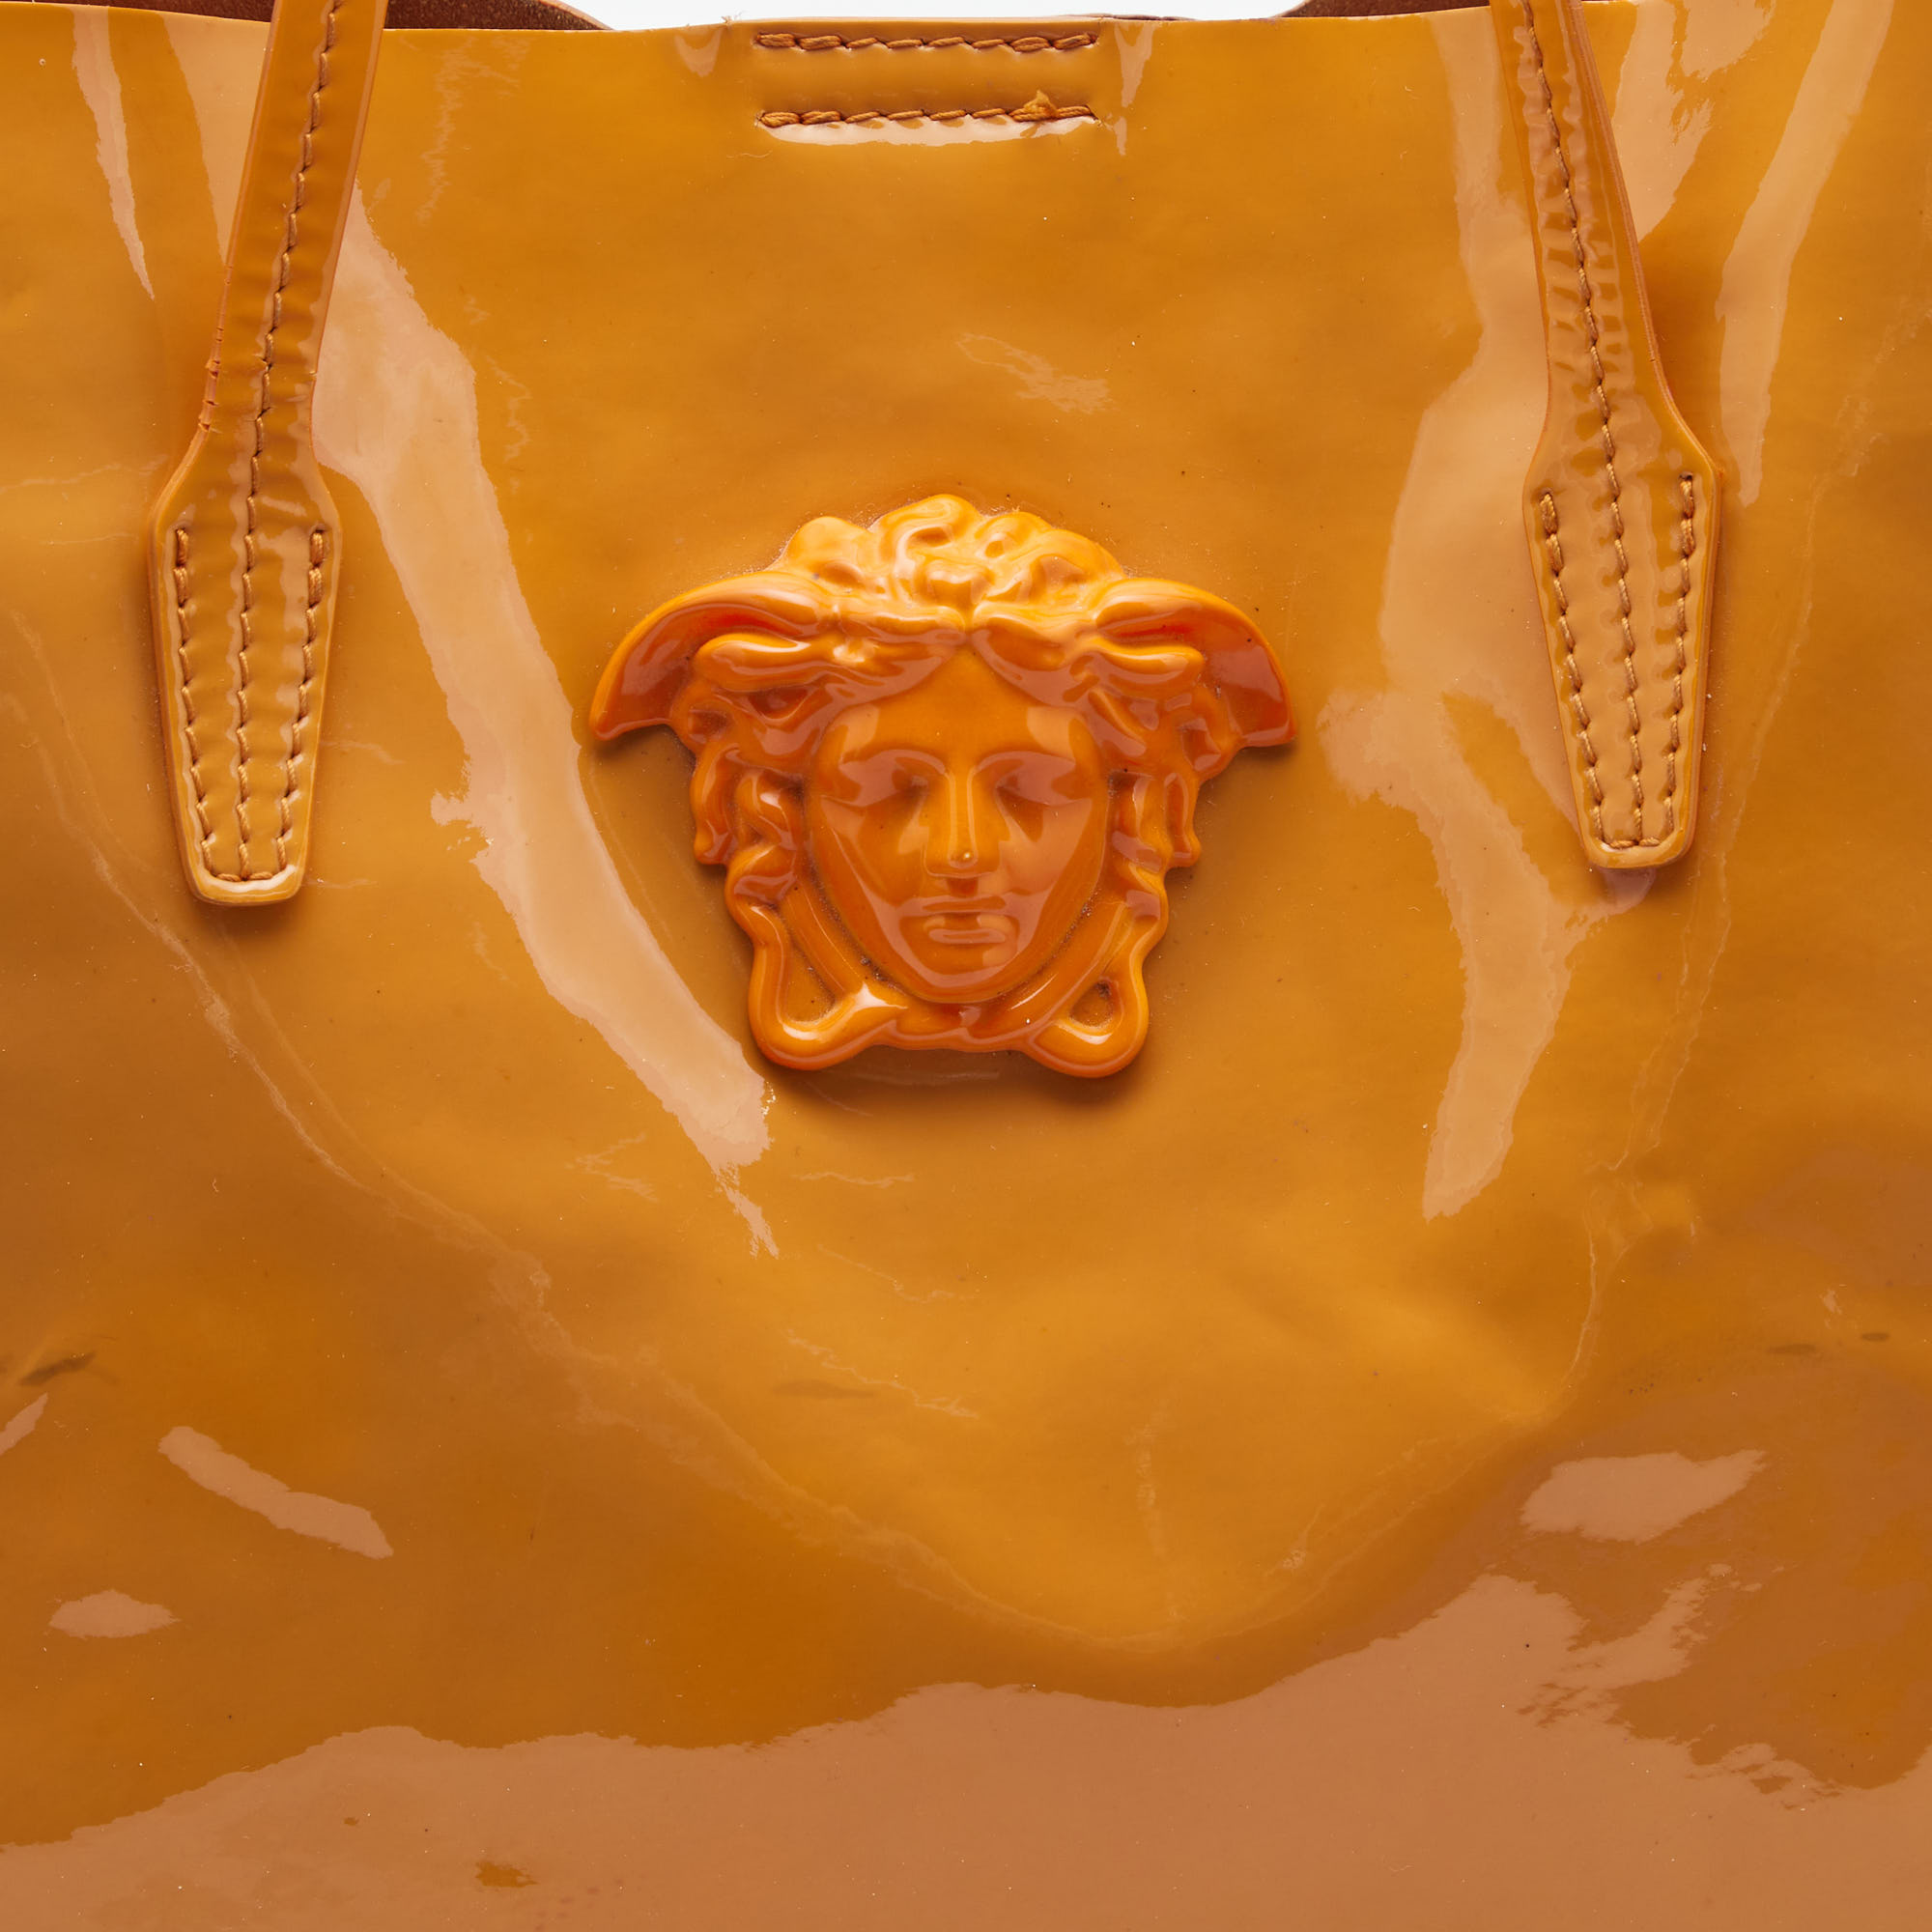 Versace Orange Patent Leather Medusa Icon Shopper Tote